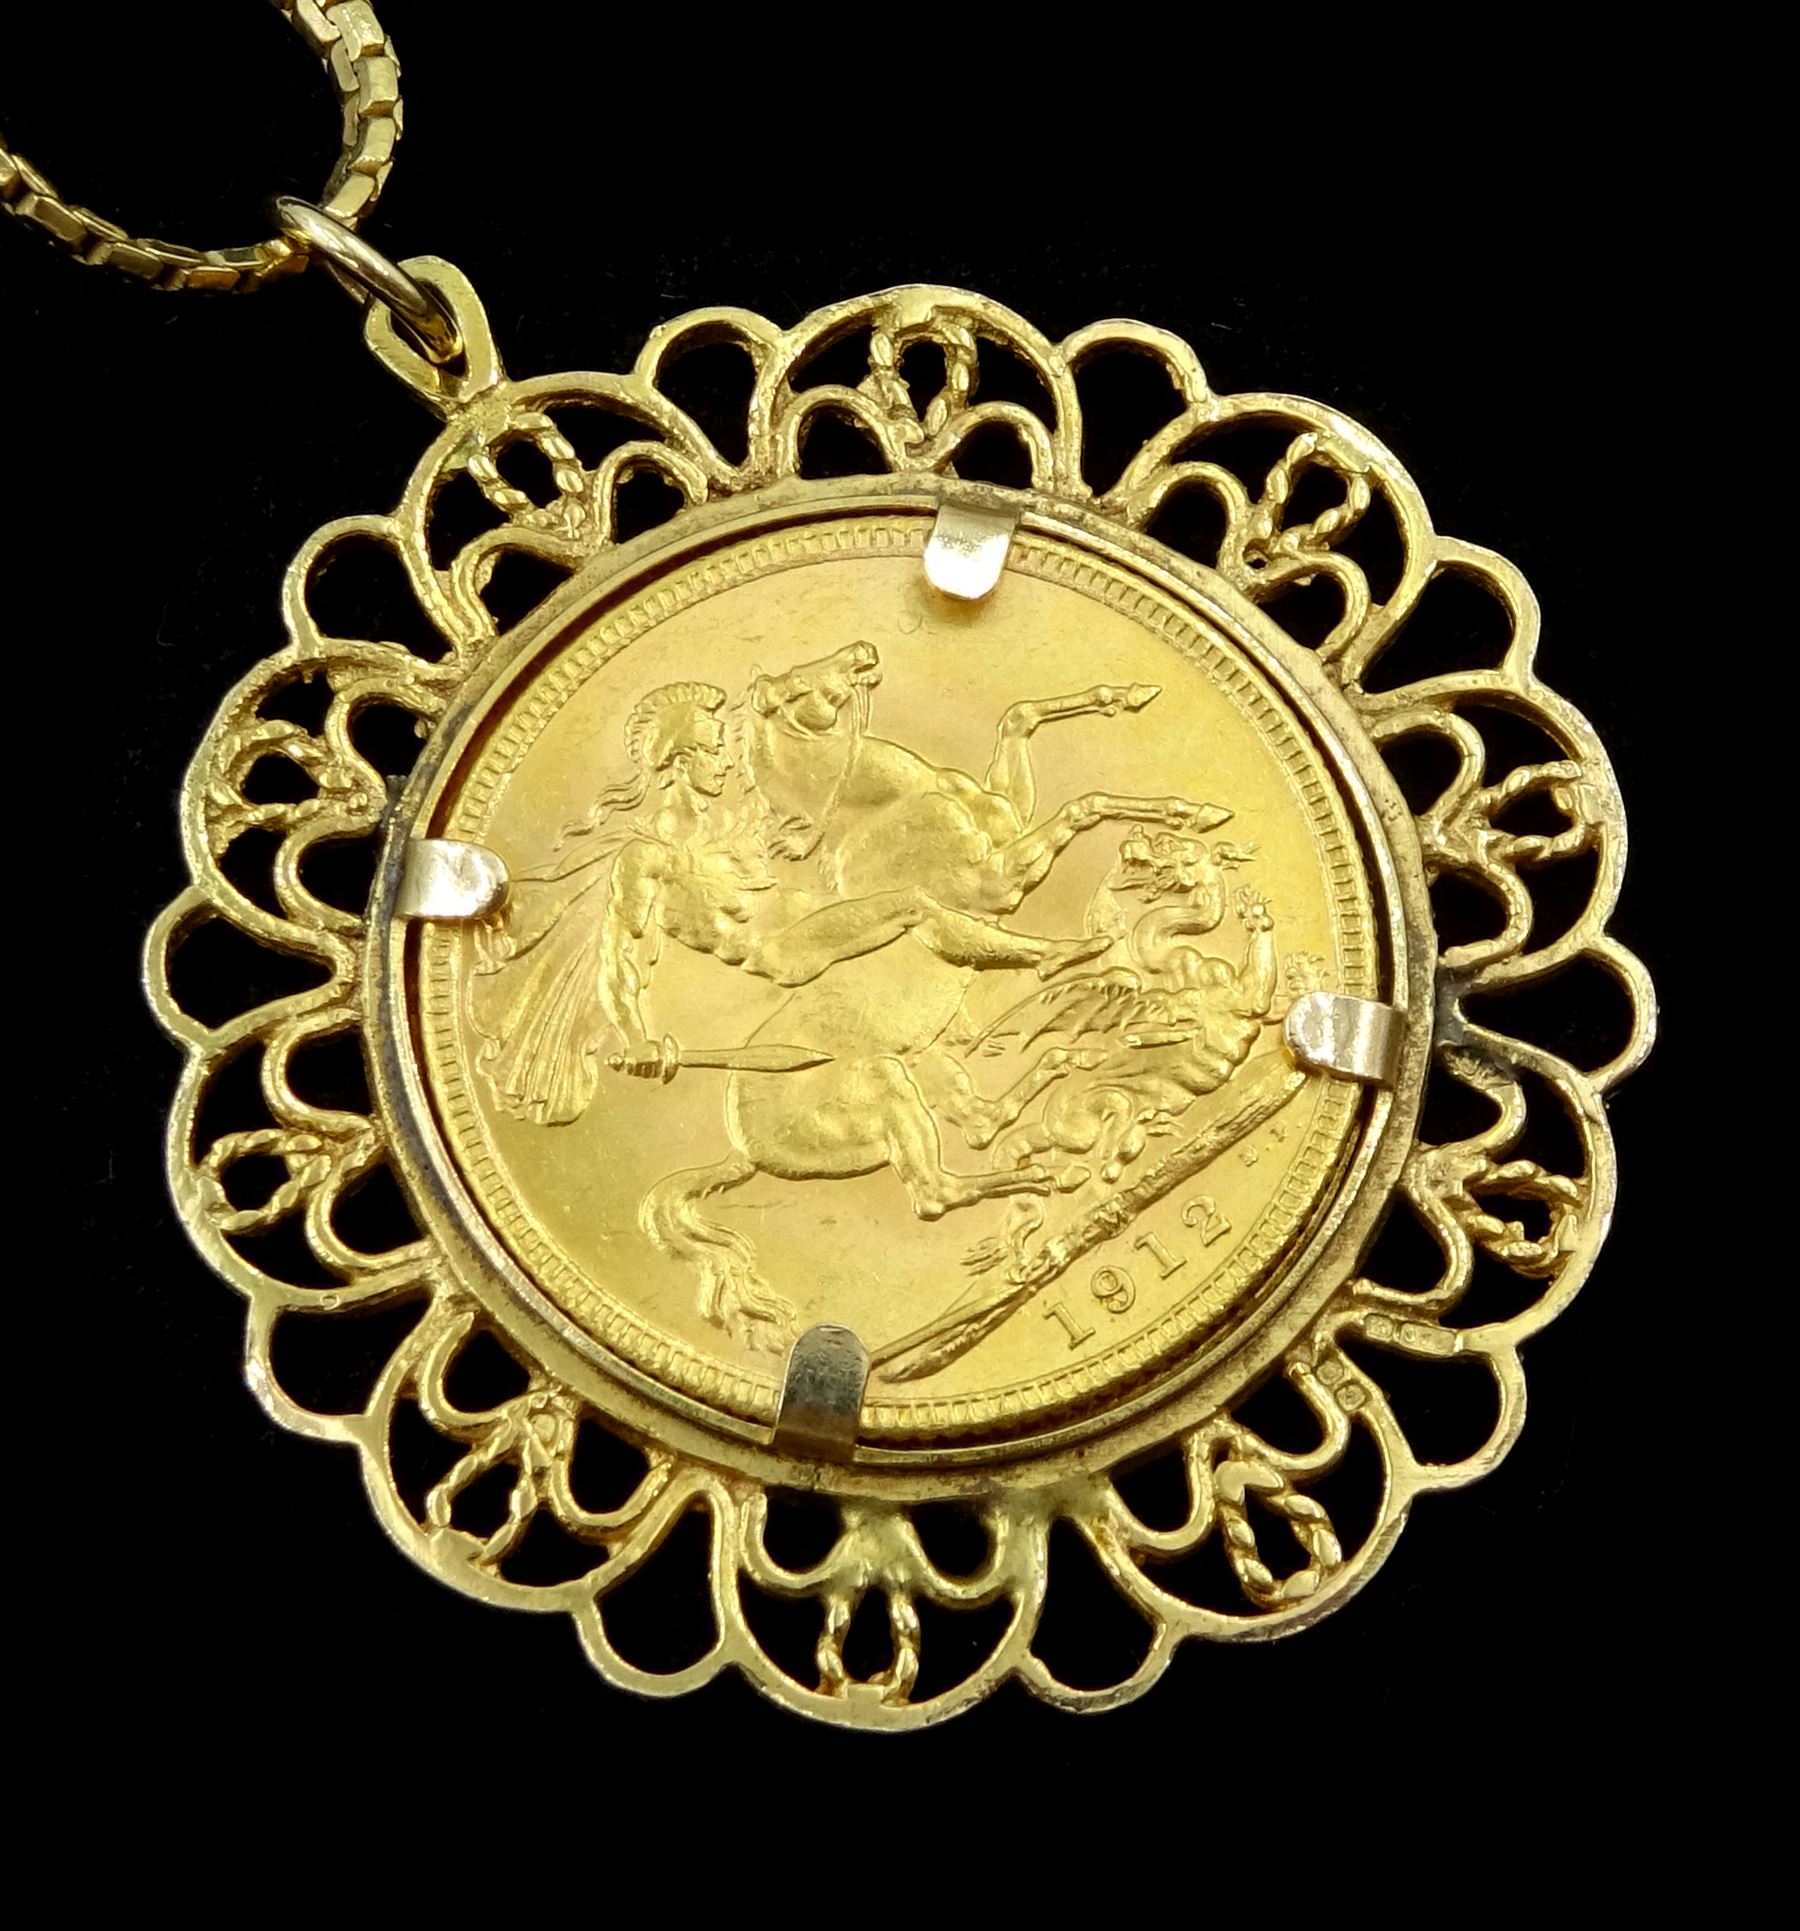 King George V 1912 gold full sovereign coin - Image 3 of 3